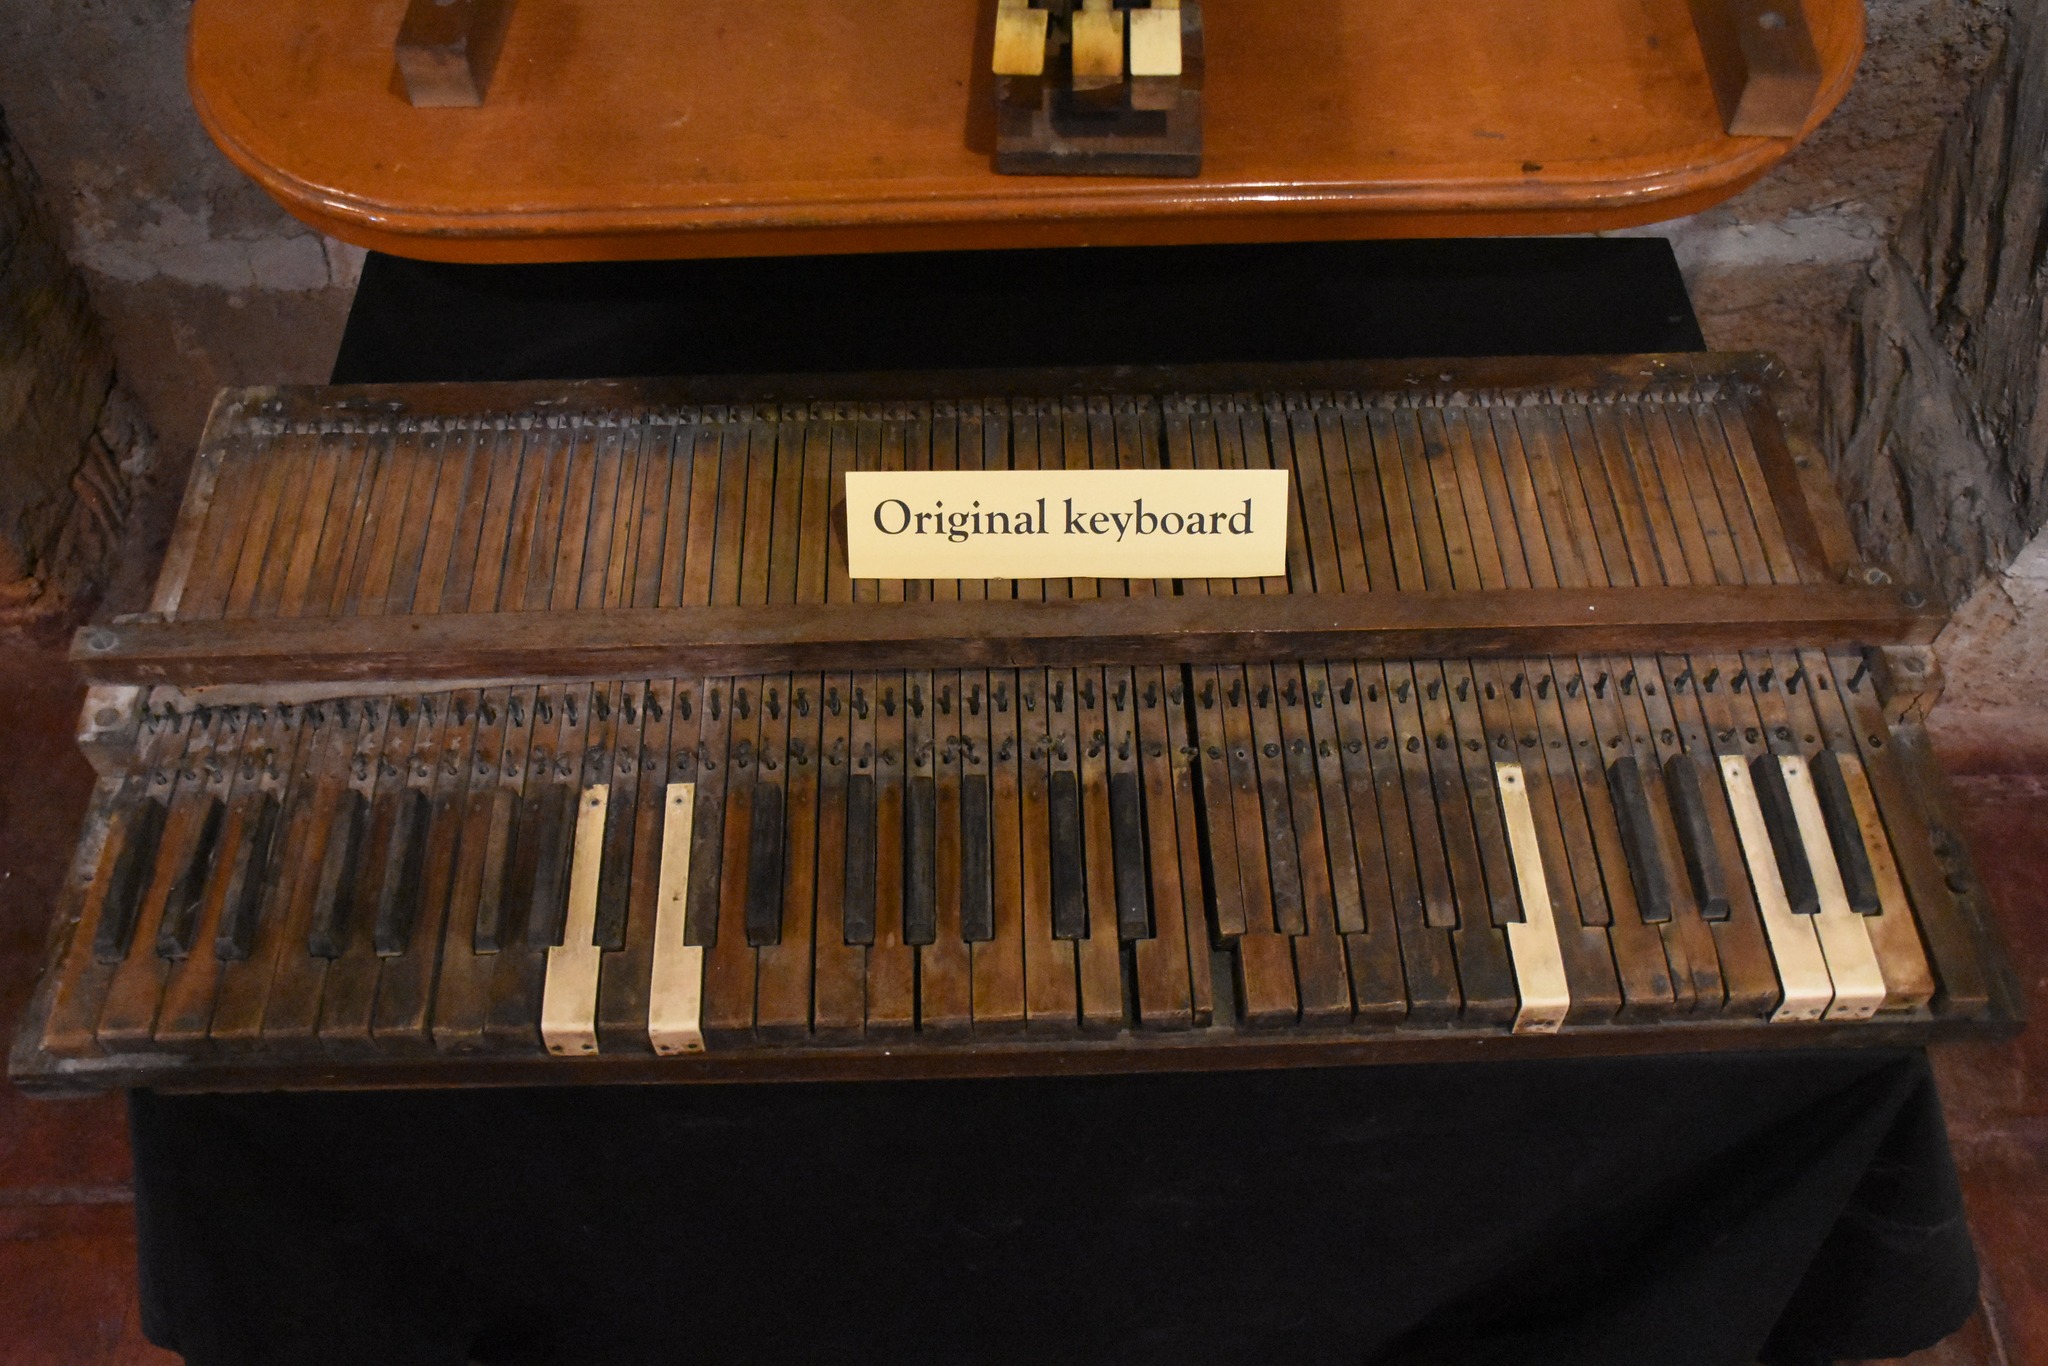 original keyboard of the Bamboo Organ